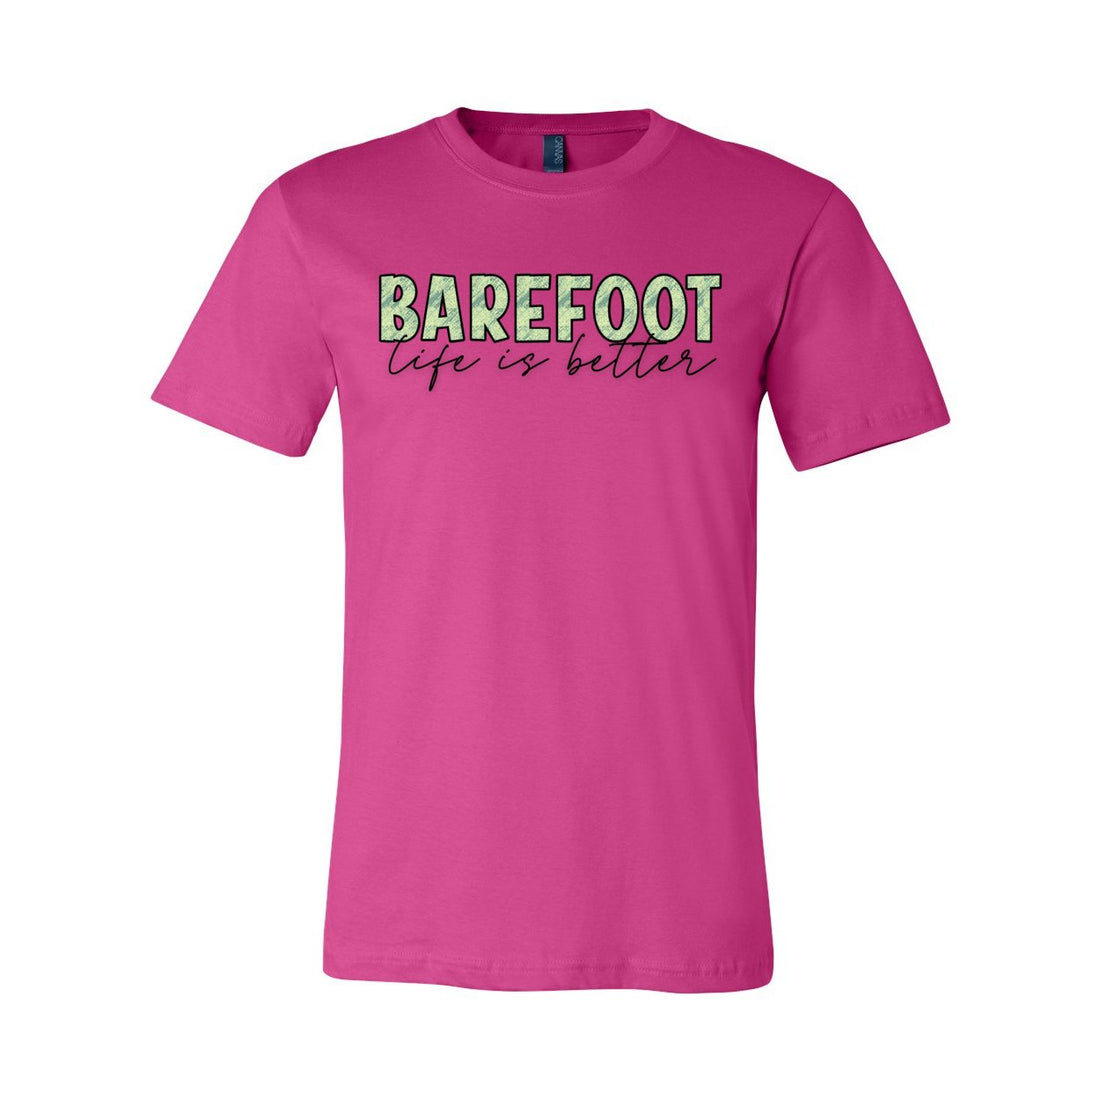 Barefoot Life Short Sleeve Jersey Tee - T-Shirts - Positively Sassy - Barefoot Life Short Sleeve Jersey Tee